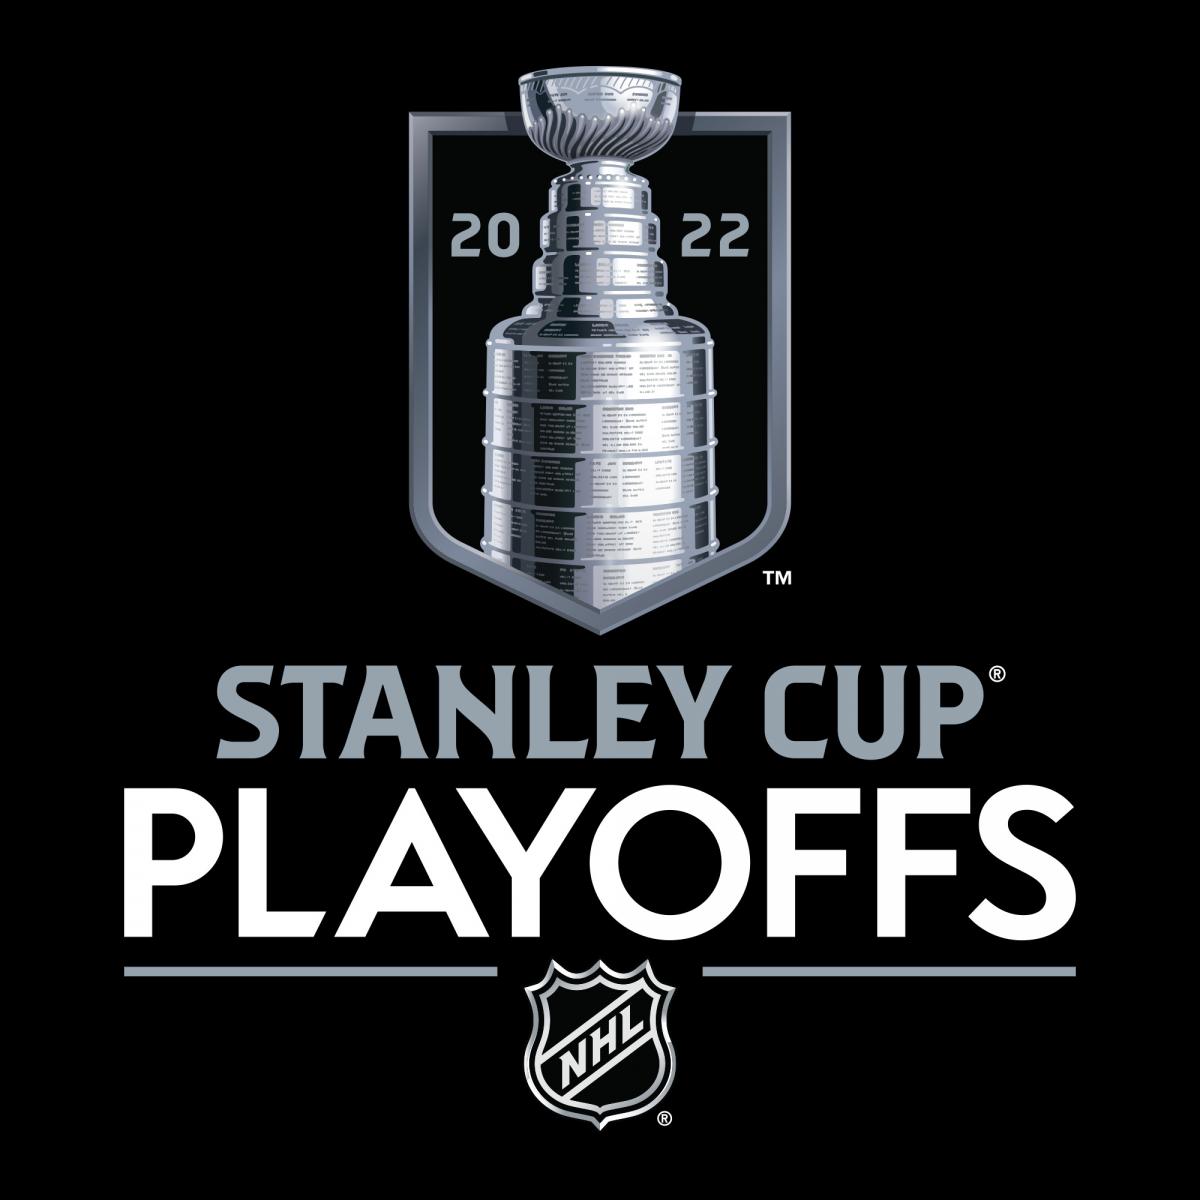 Photo: Publicity/Stanley Cup